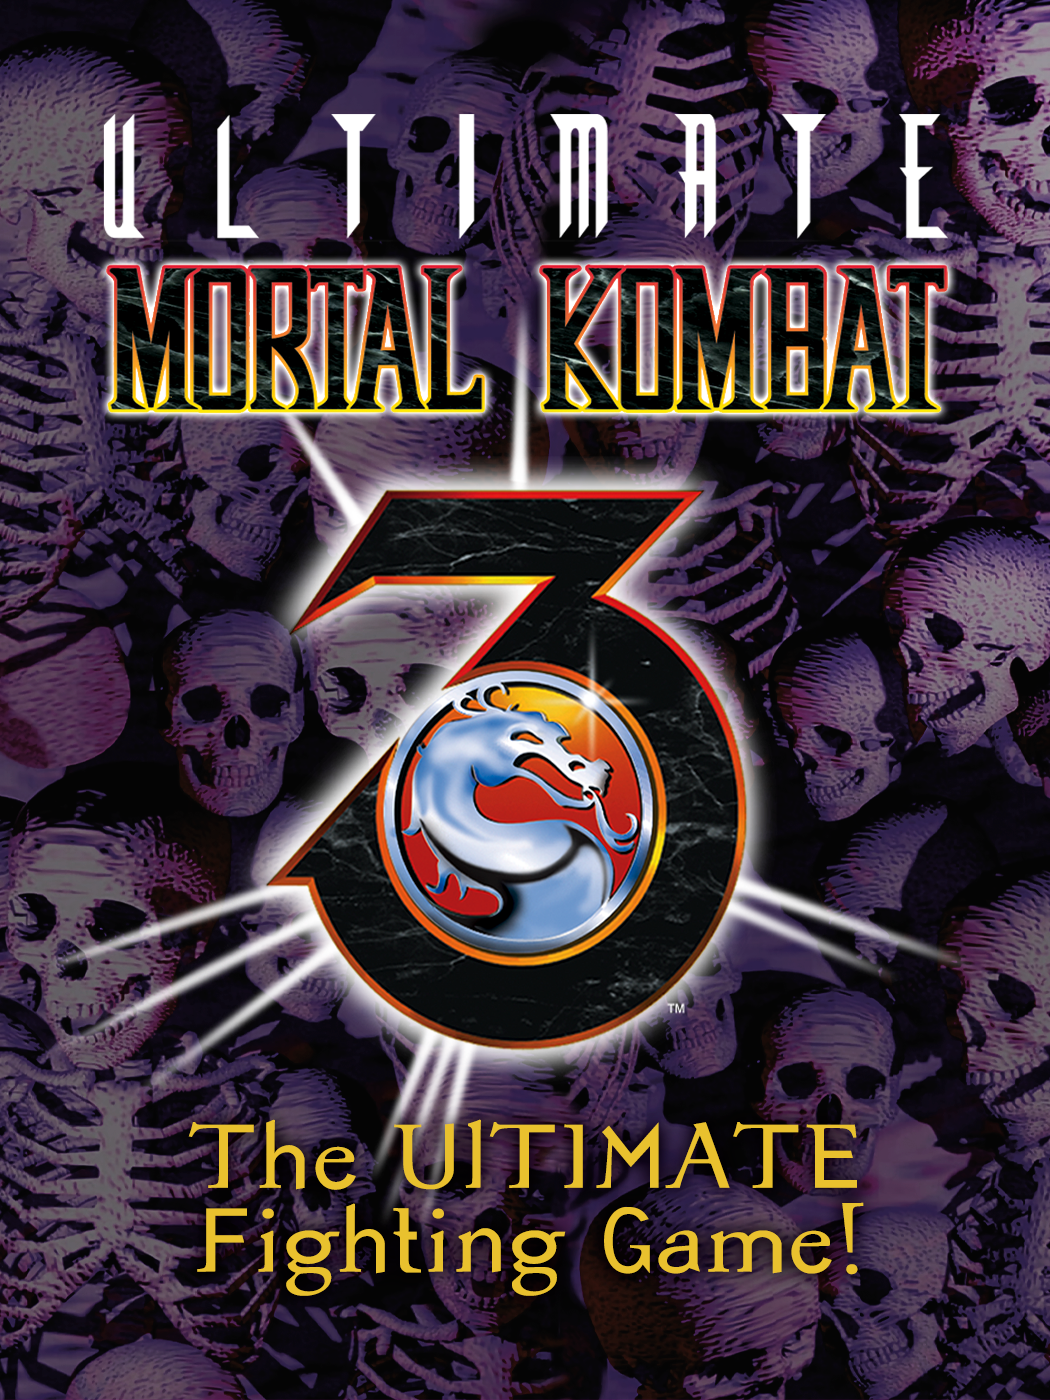 Mortal Kombat 3 (1995)